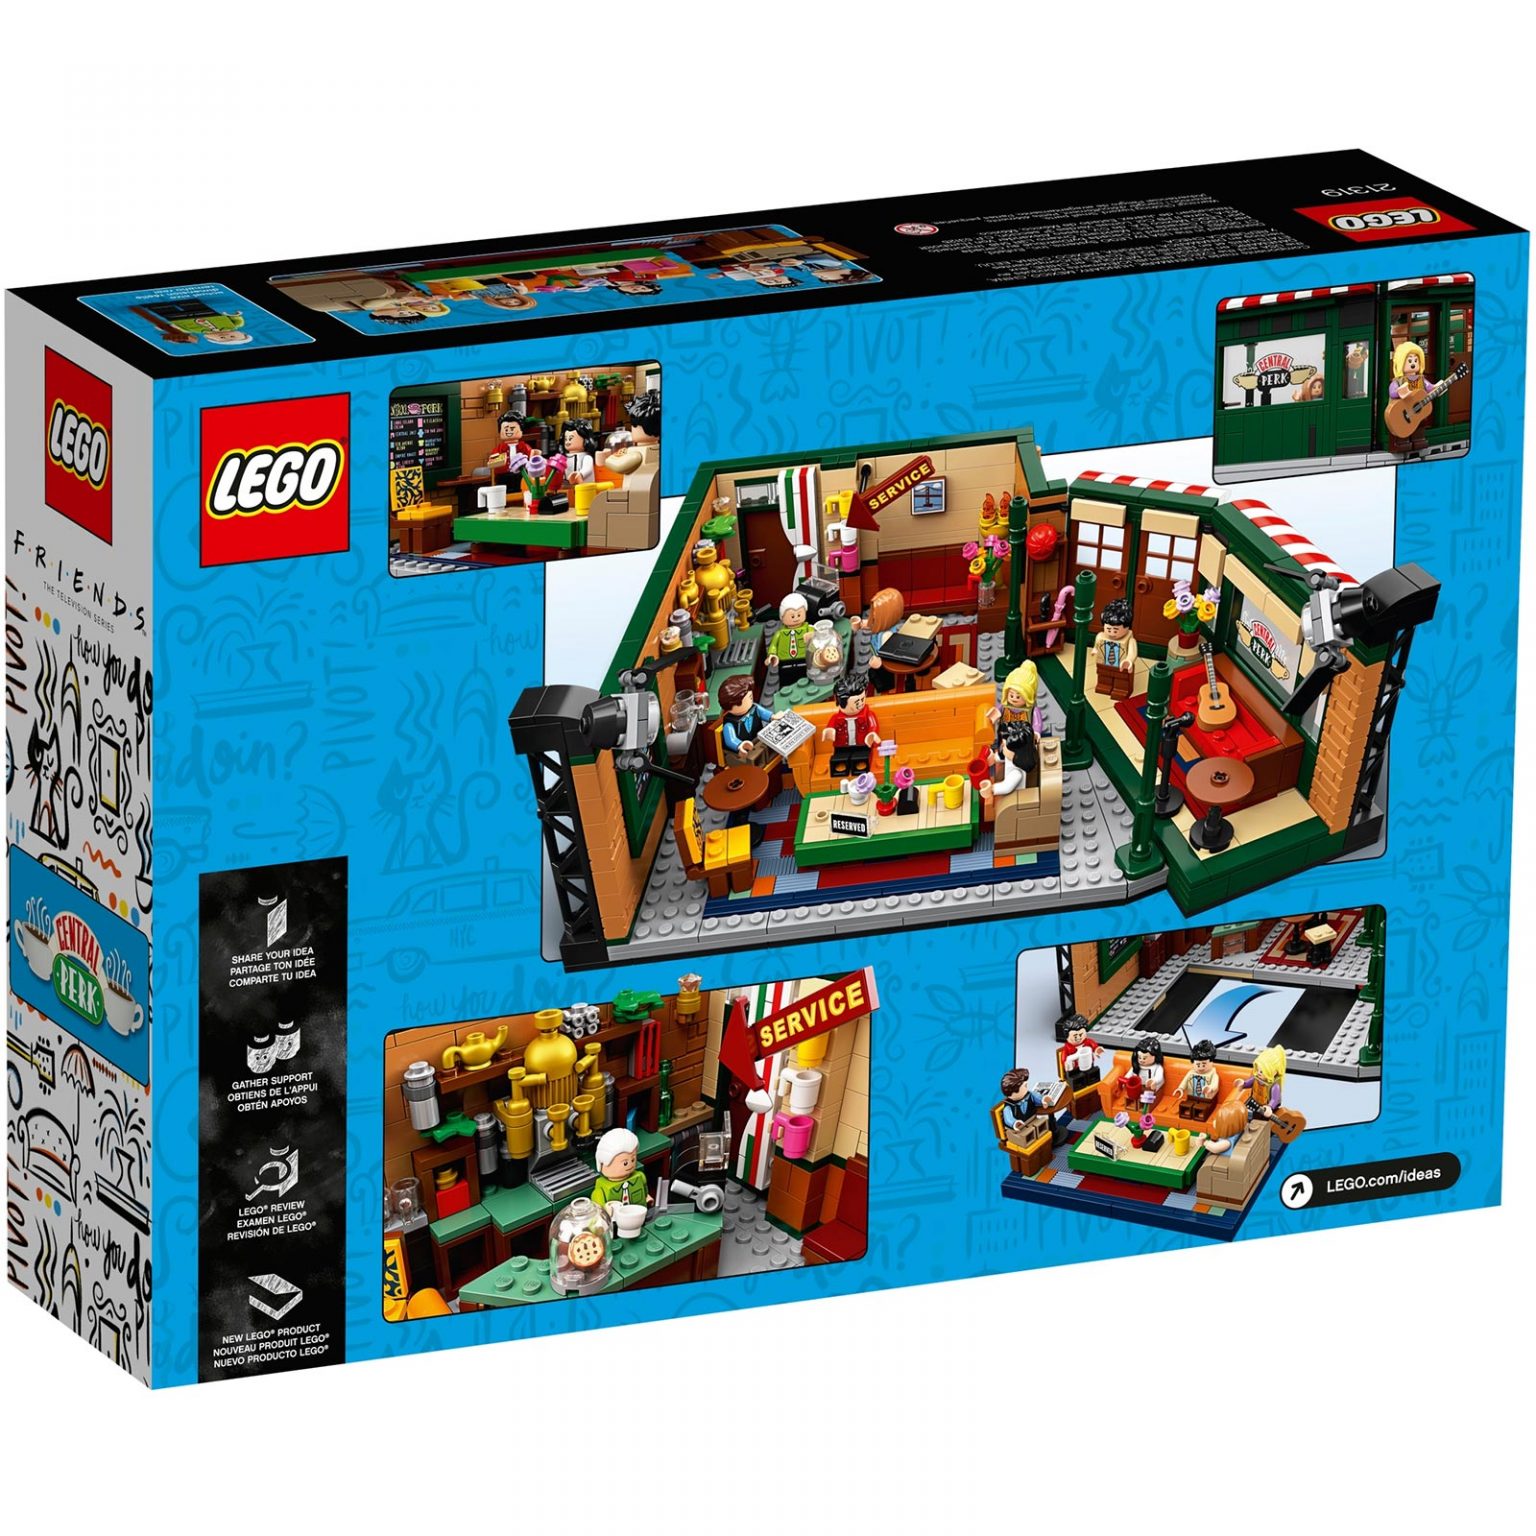 LEGO IDEAS Friends Central Perk Set #21319